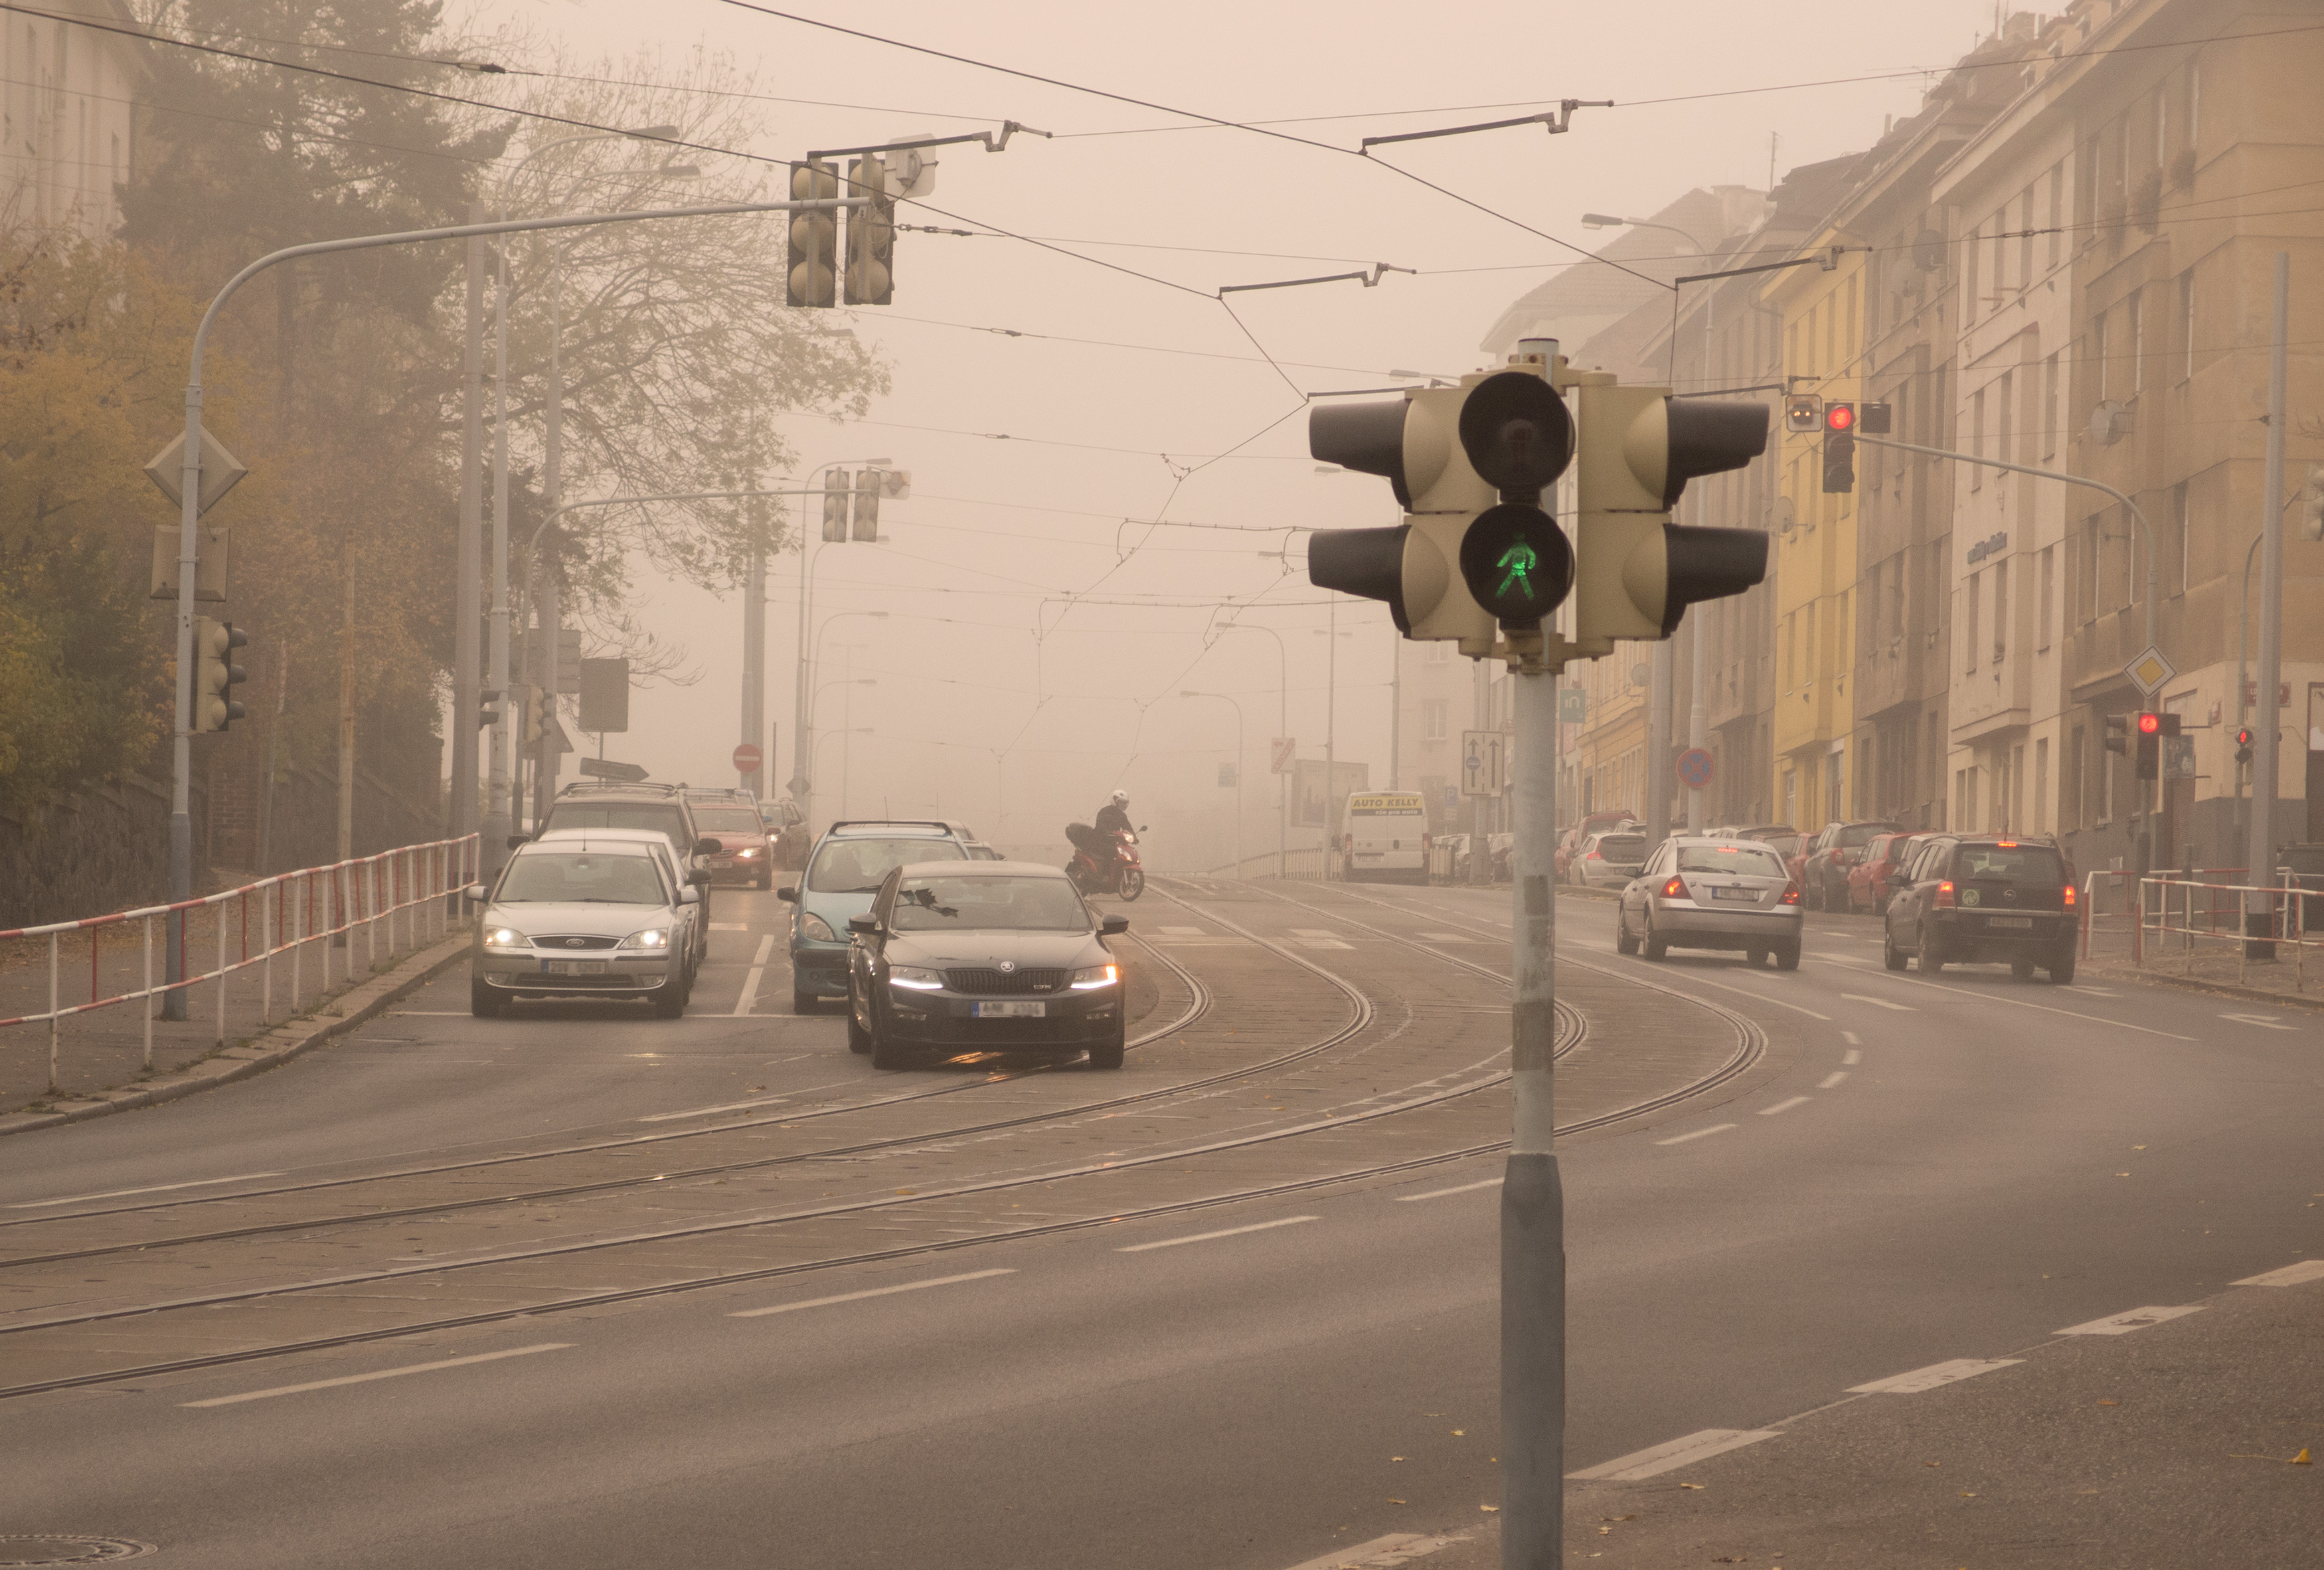 urban smog caused by cars